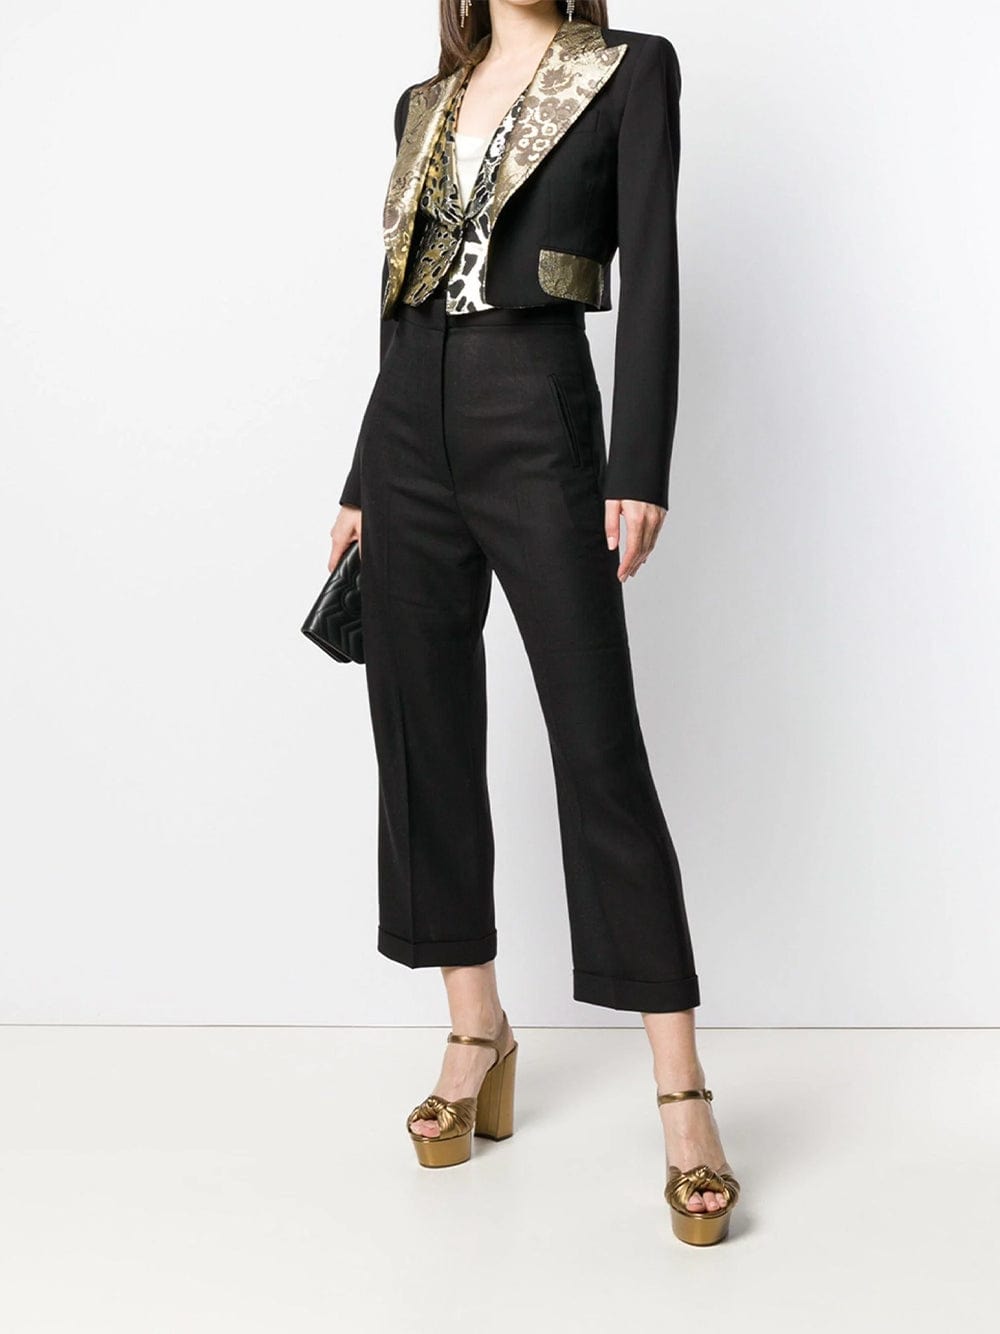 Dolce & Gabbana Jacquard Cropped Blazer Jacket